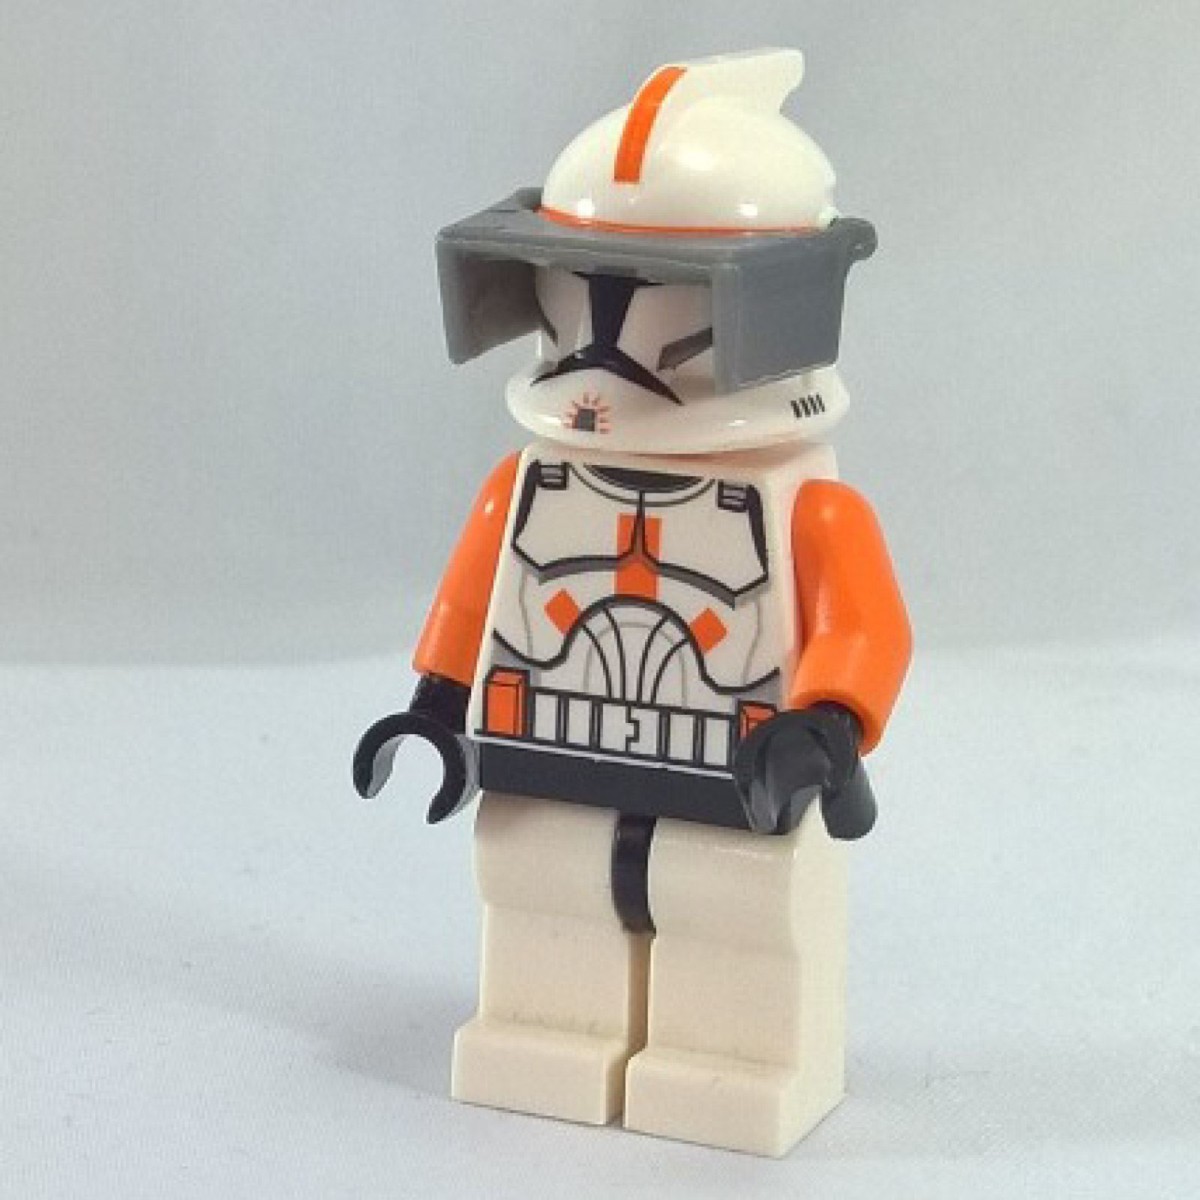 Lego Star Wars Clone troopers minifigures à choisir